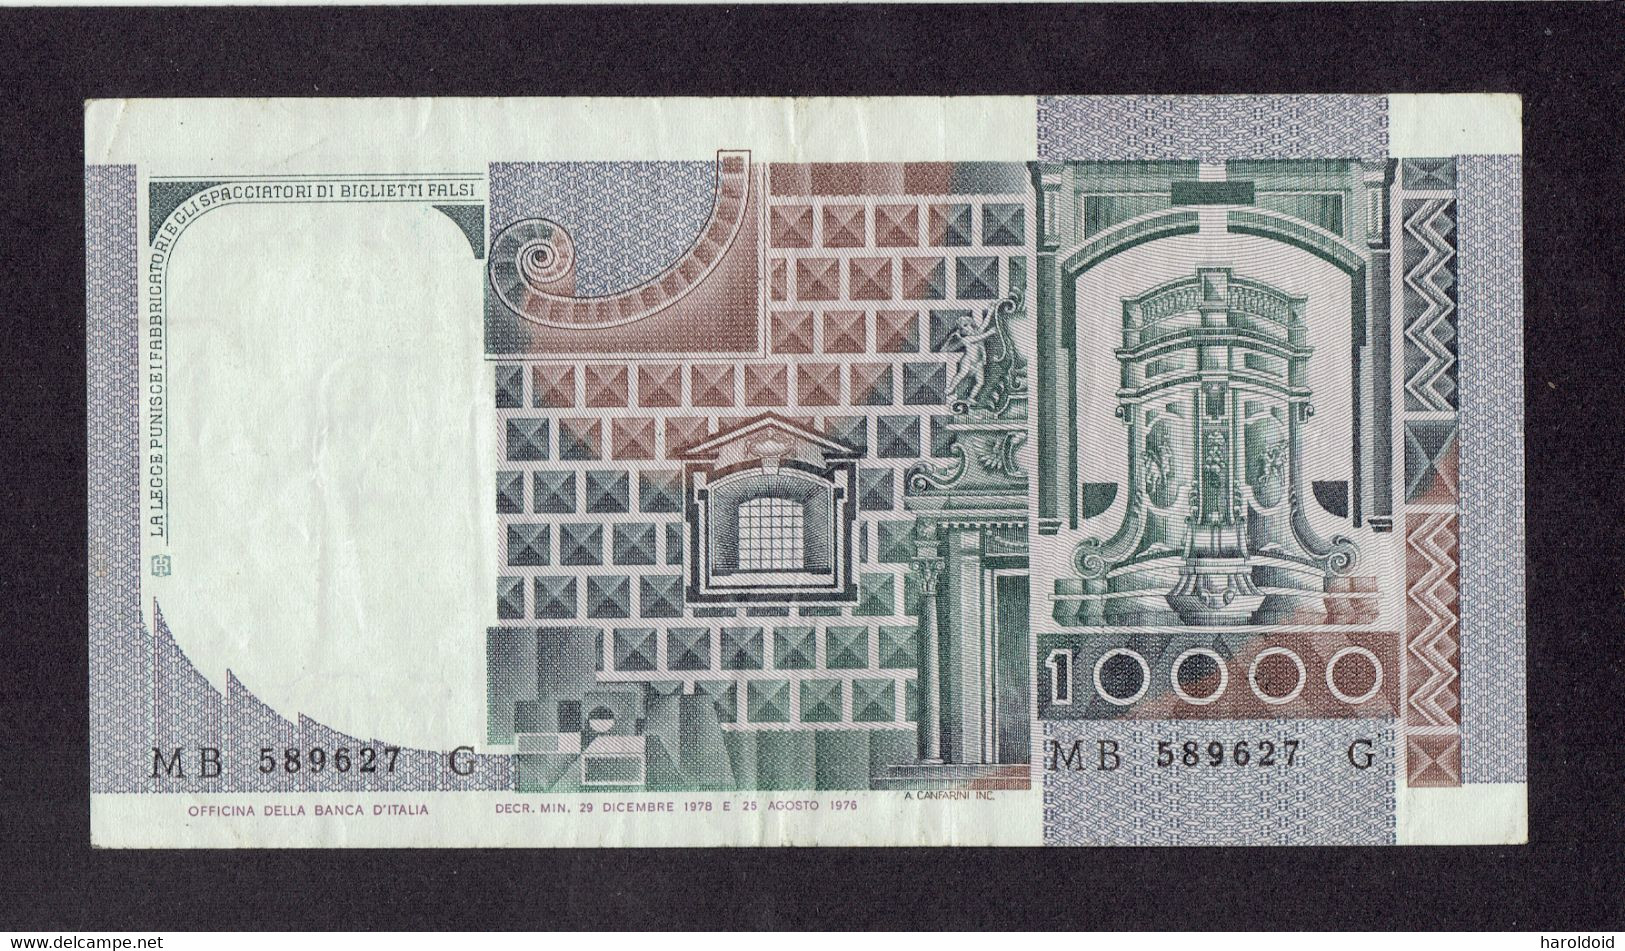 ITALIE - 10000 LIRE - TTB - 10000 Lire